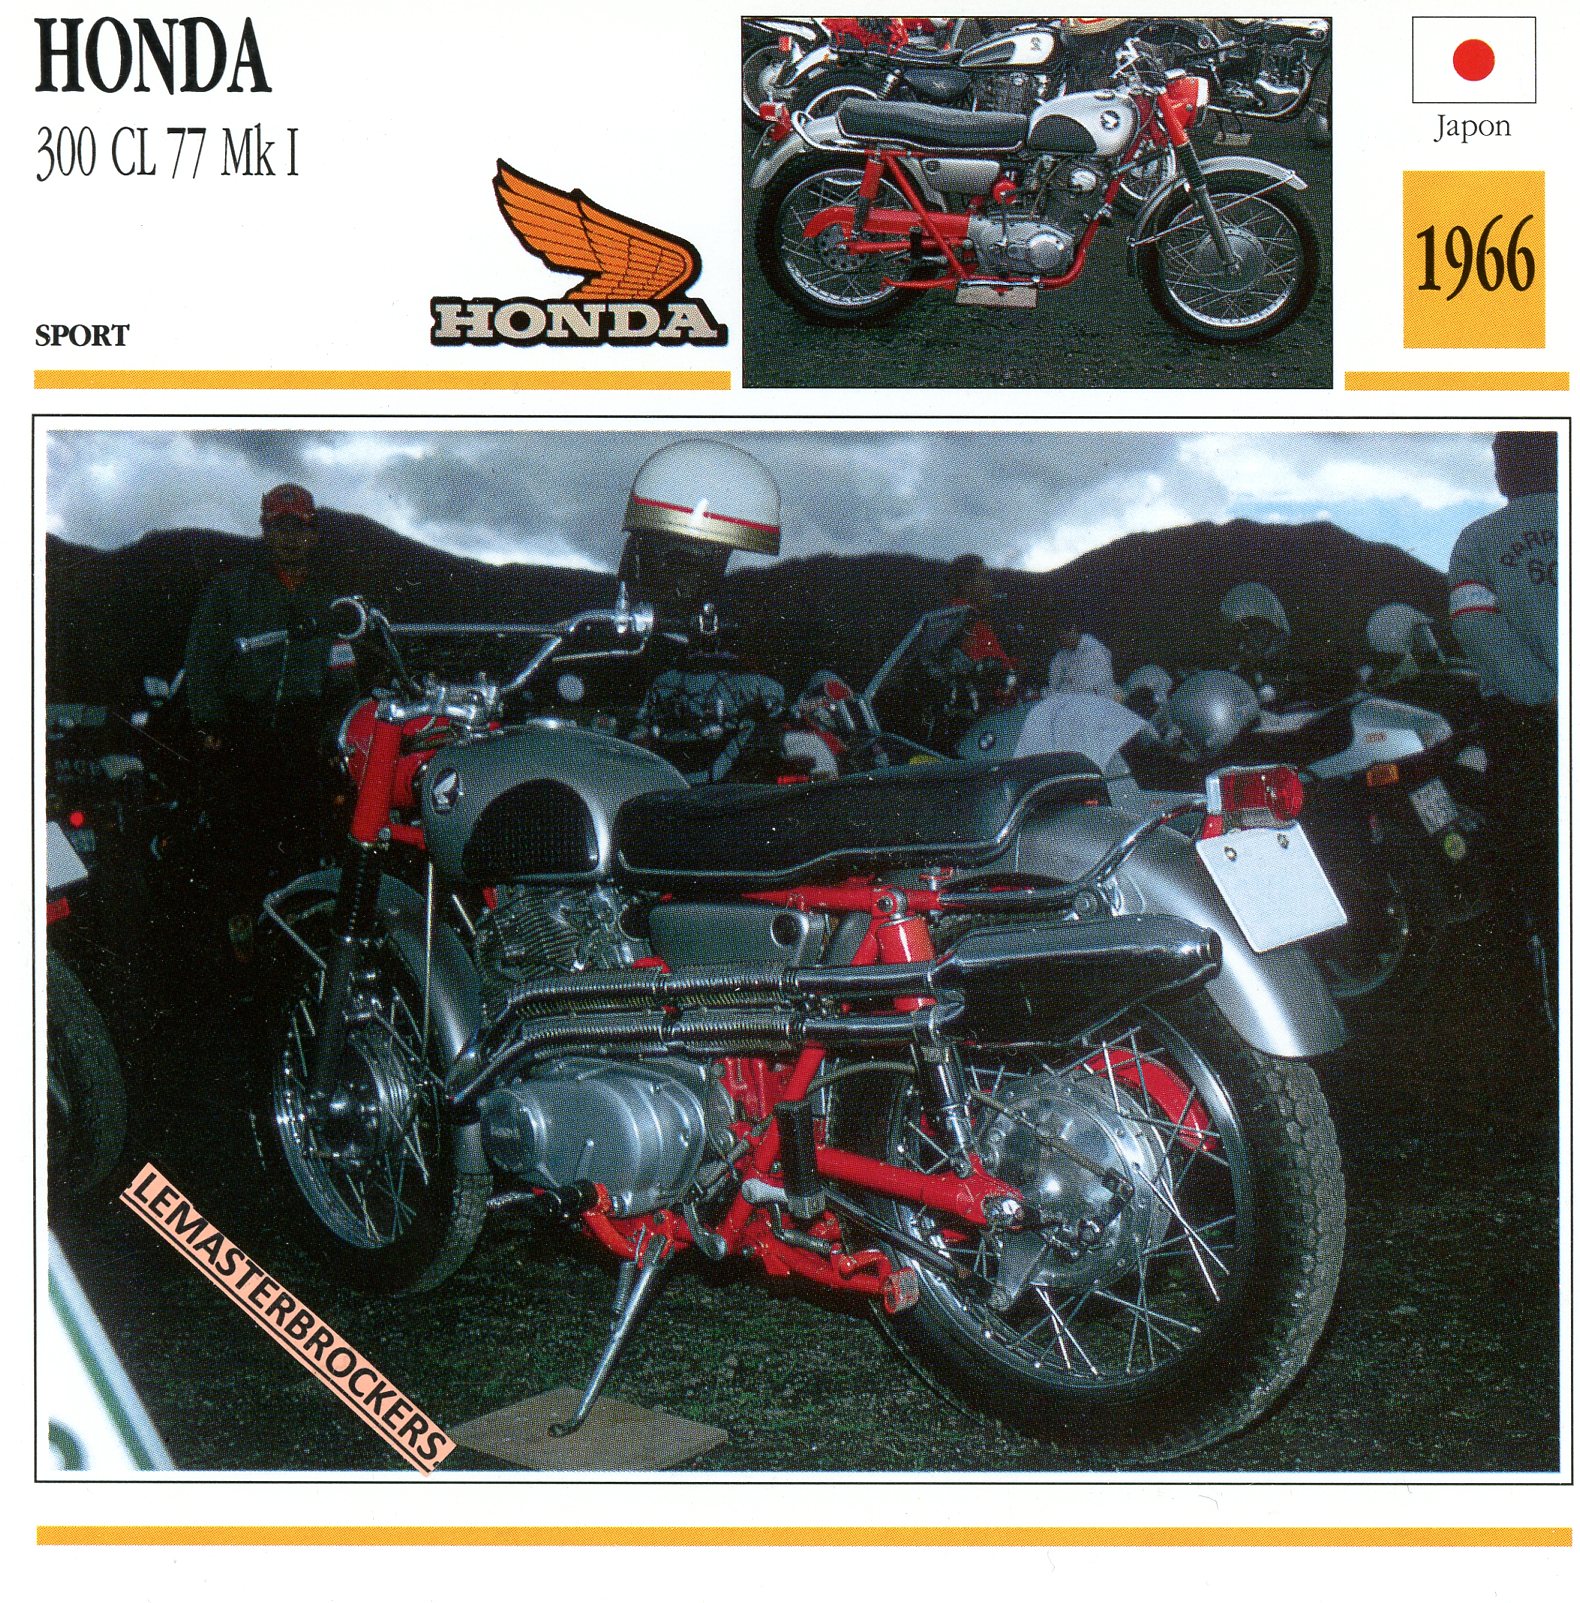 FICHE-MOTO-HONDA-300-CL77-MK1-1966-LEMASTERBROCKERS-CARS-MOTORCYCLE